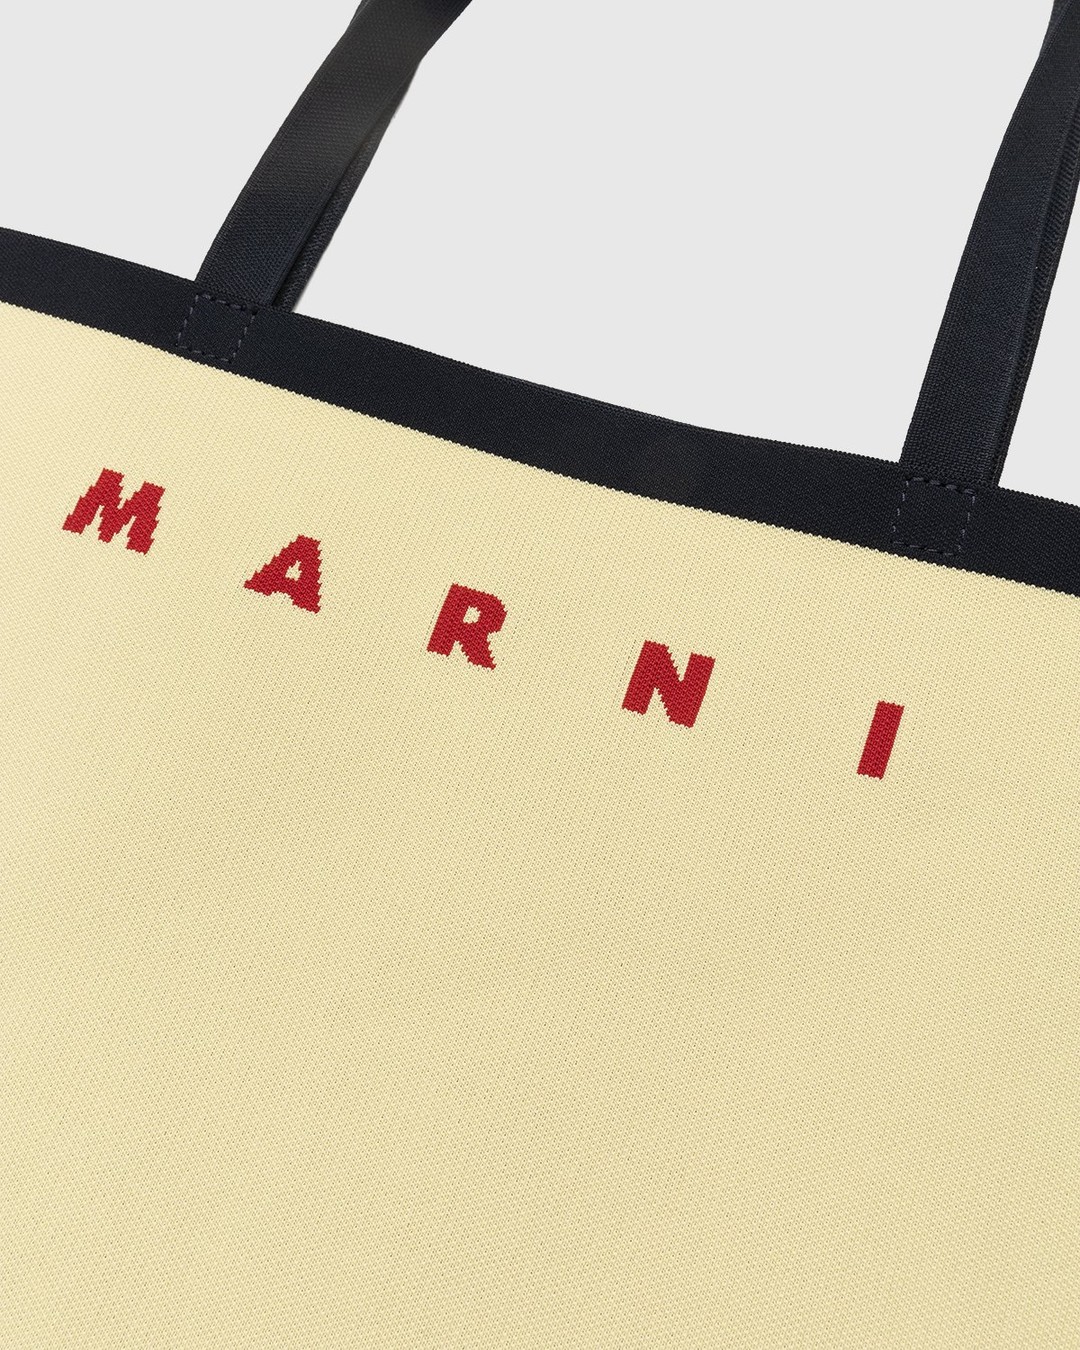 Marni – Flat Shopper Tote Beige - Bags - Beige - Image 2